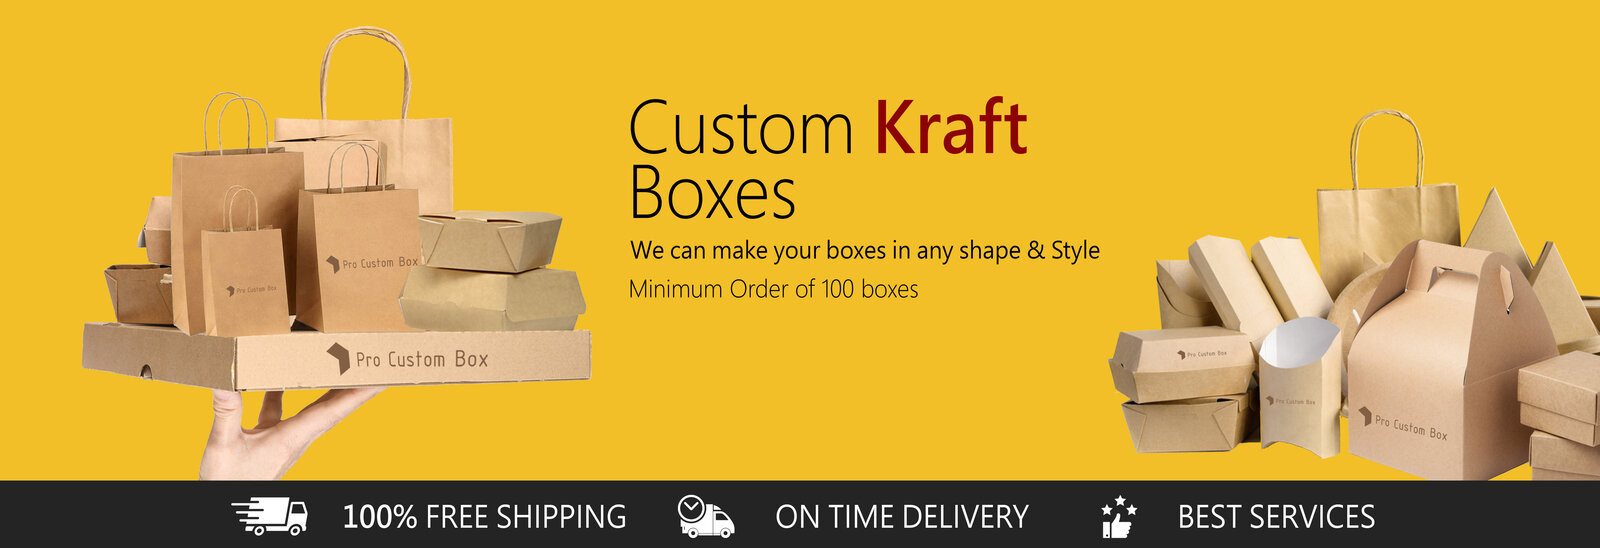 customized boxes by procustombox.com